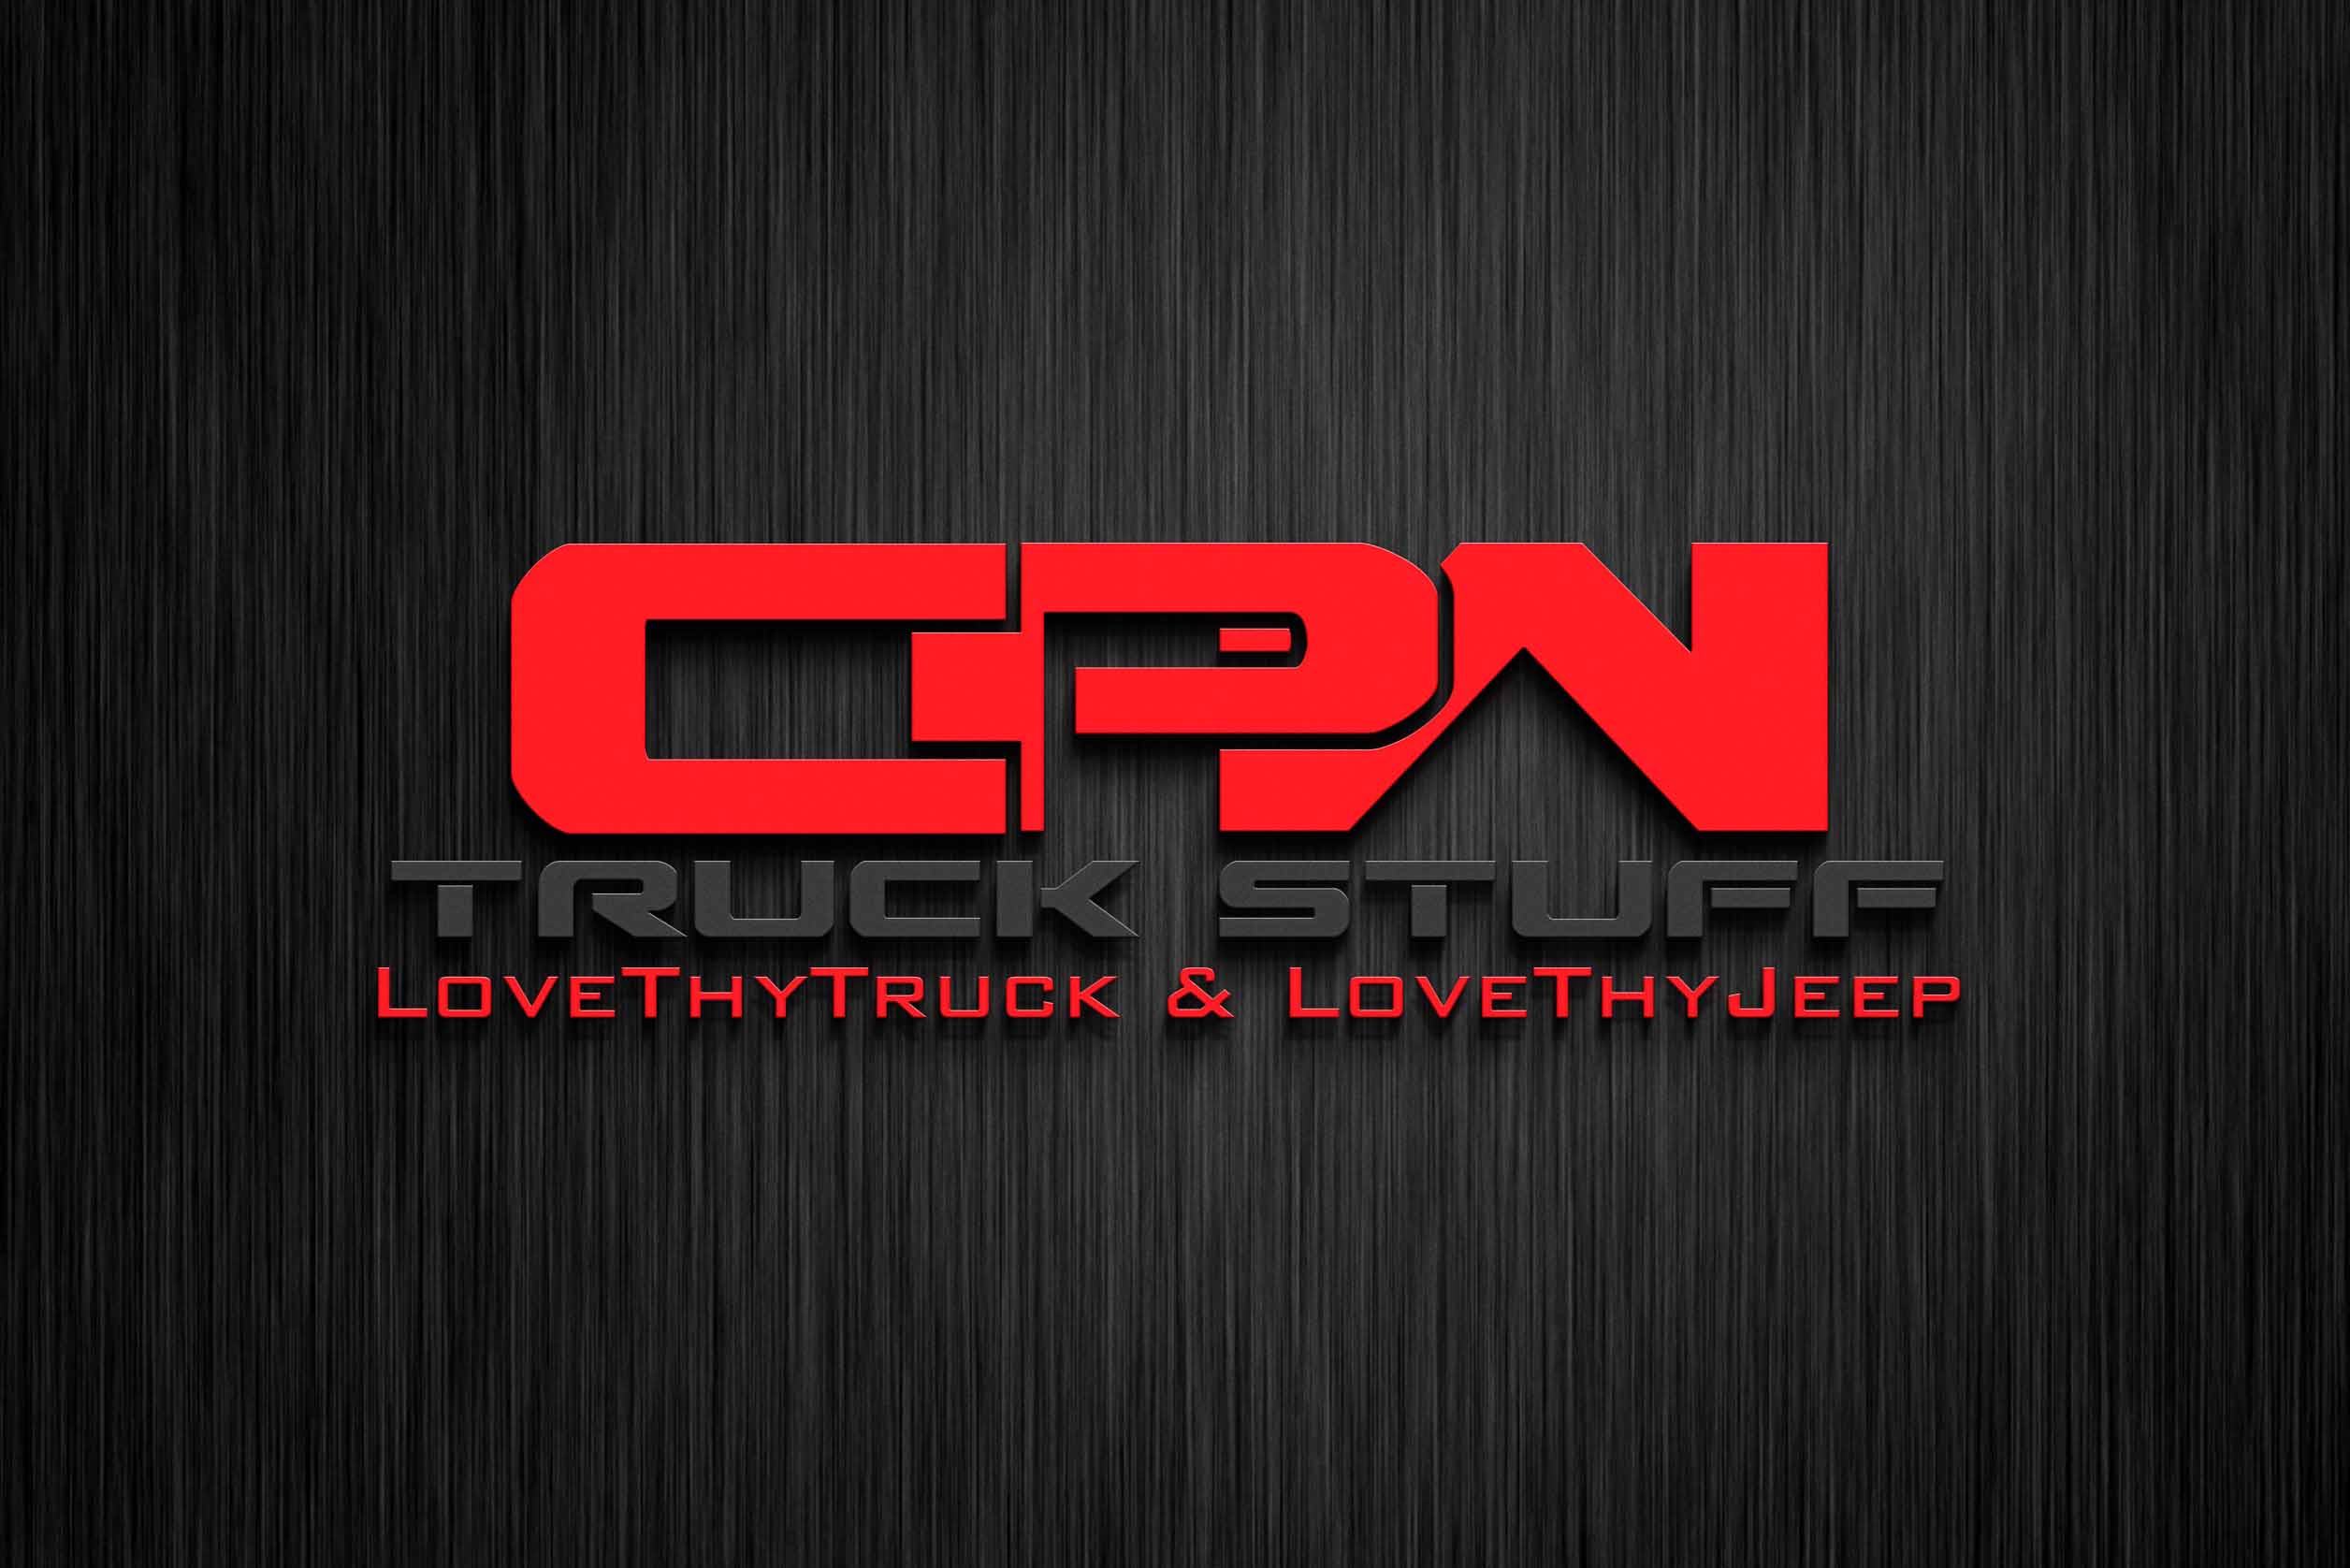 CPW Truck Stuff